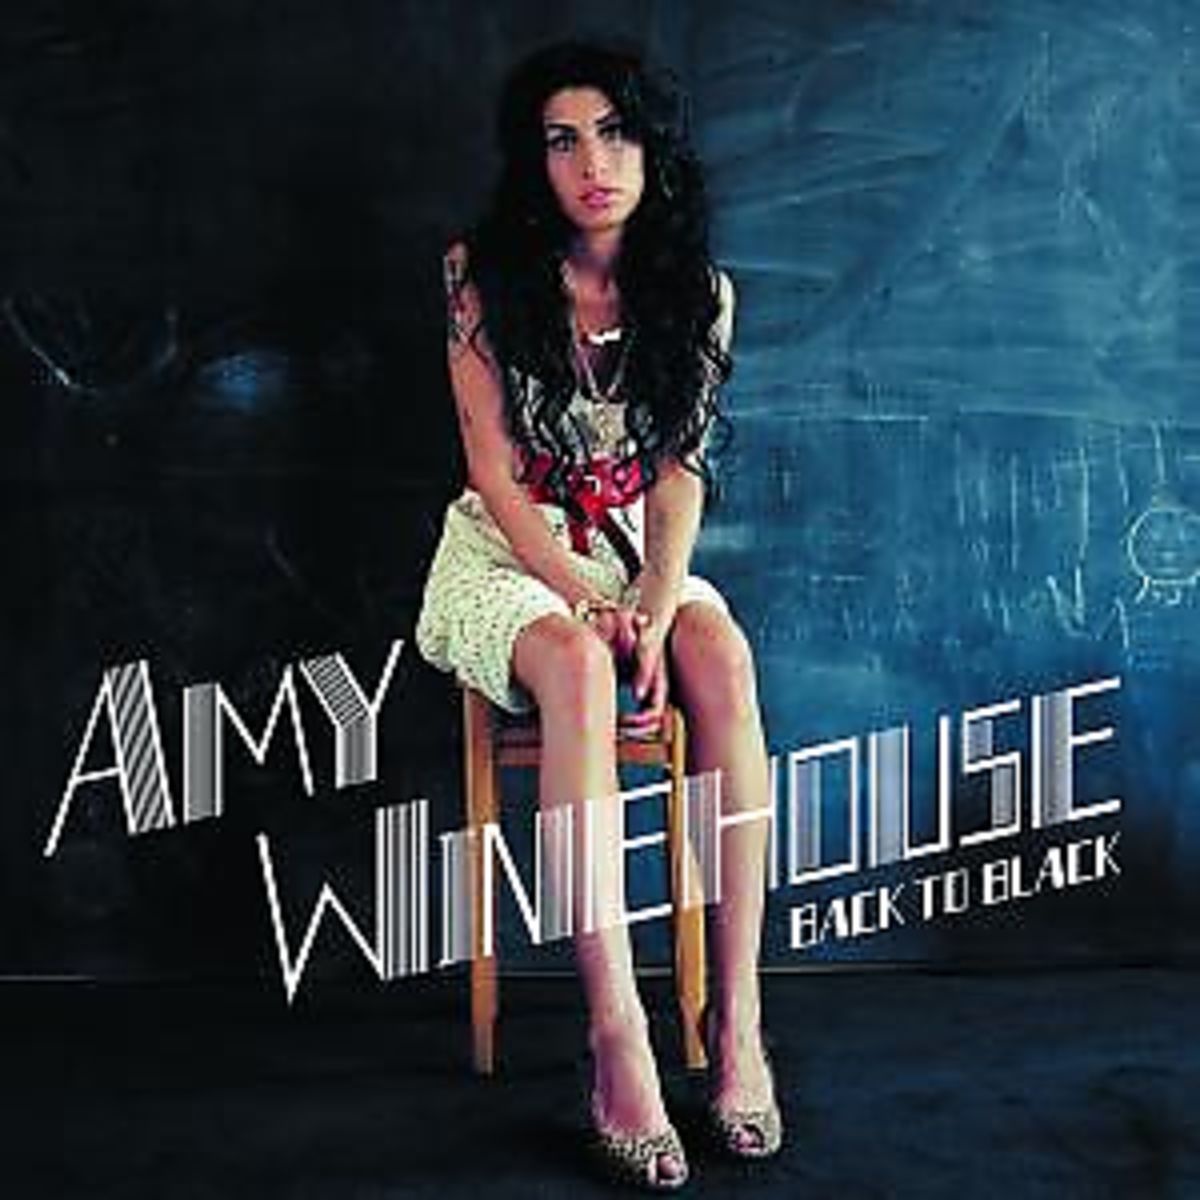 Back To Black - Amy Winehouse. (LP)